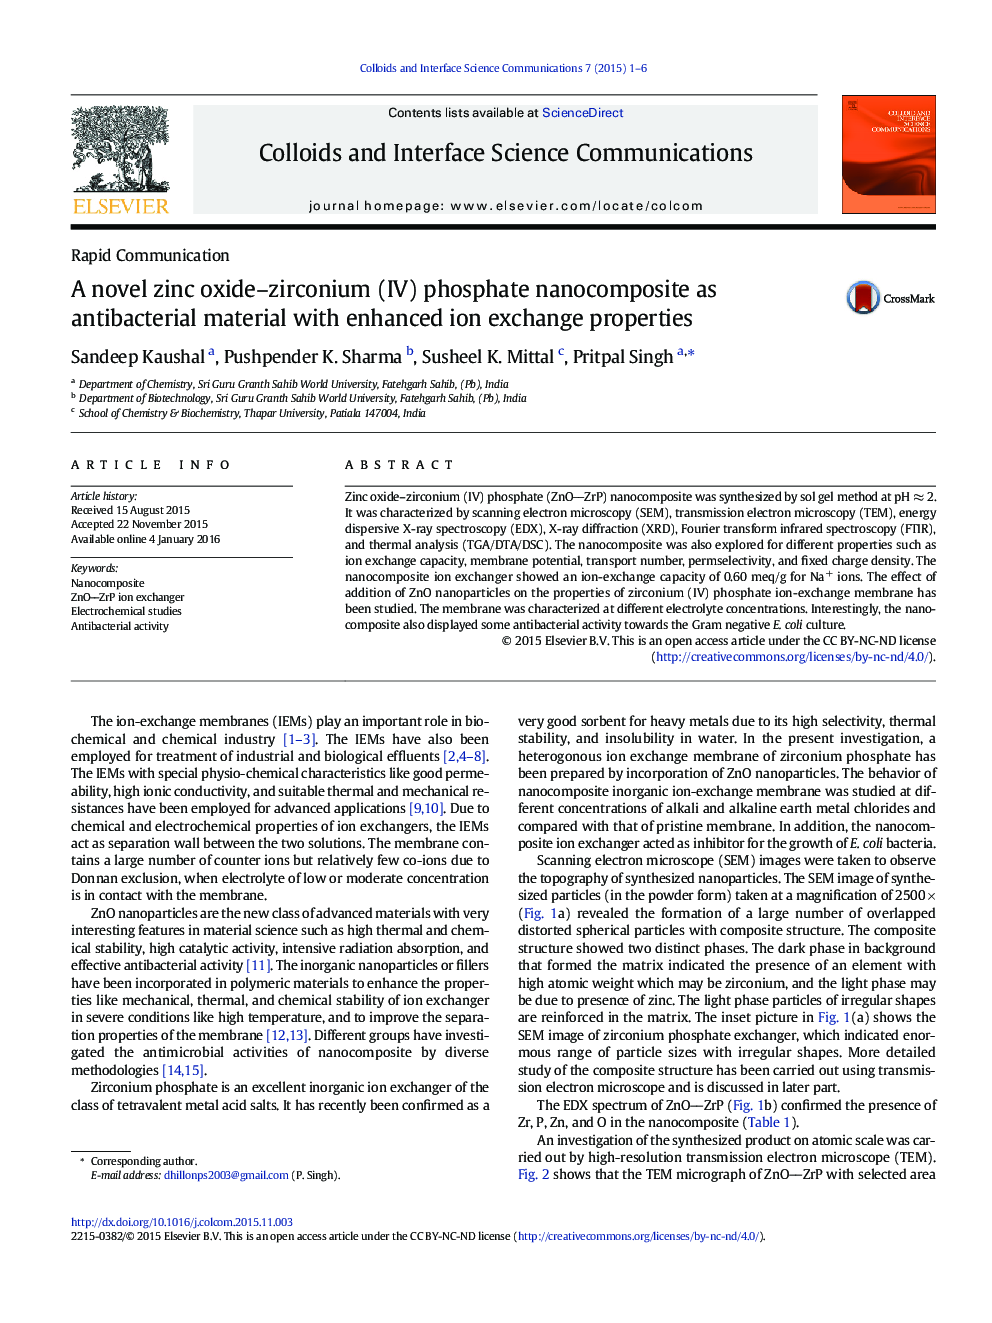 A novel zinc oxide–zirconium (IV) phosphate nanocomposite as antibacterial material with enhanced ion exchange properties